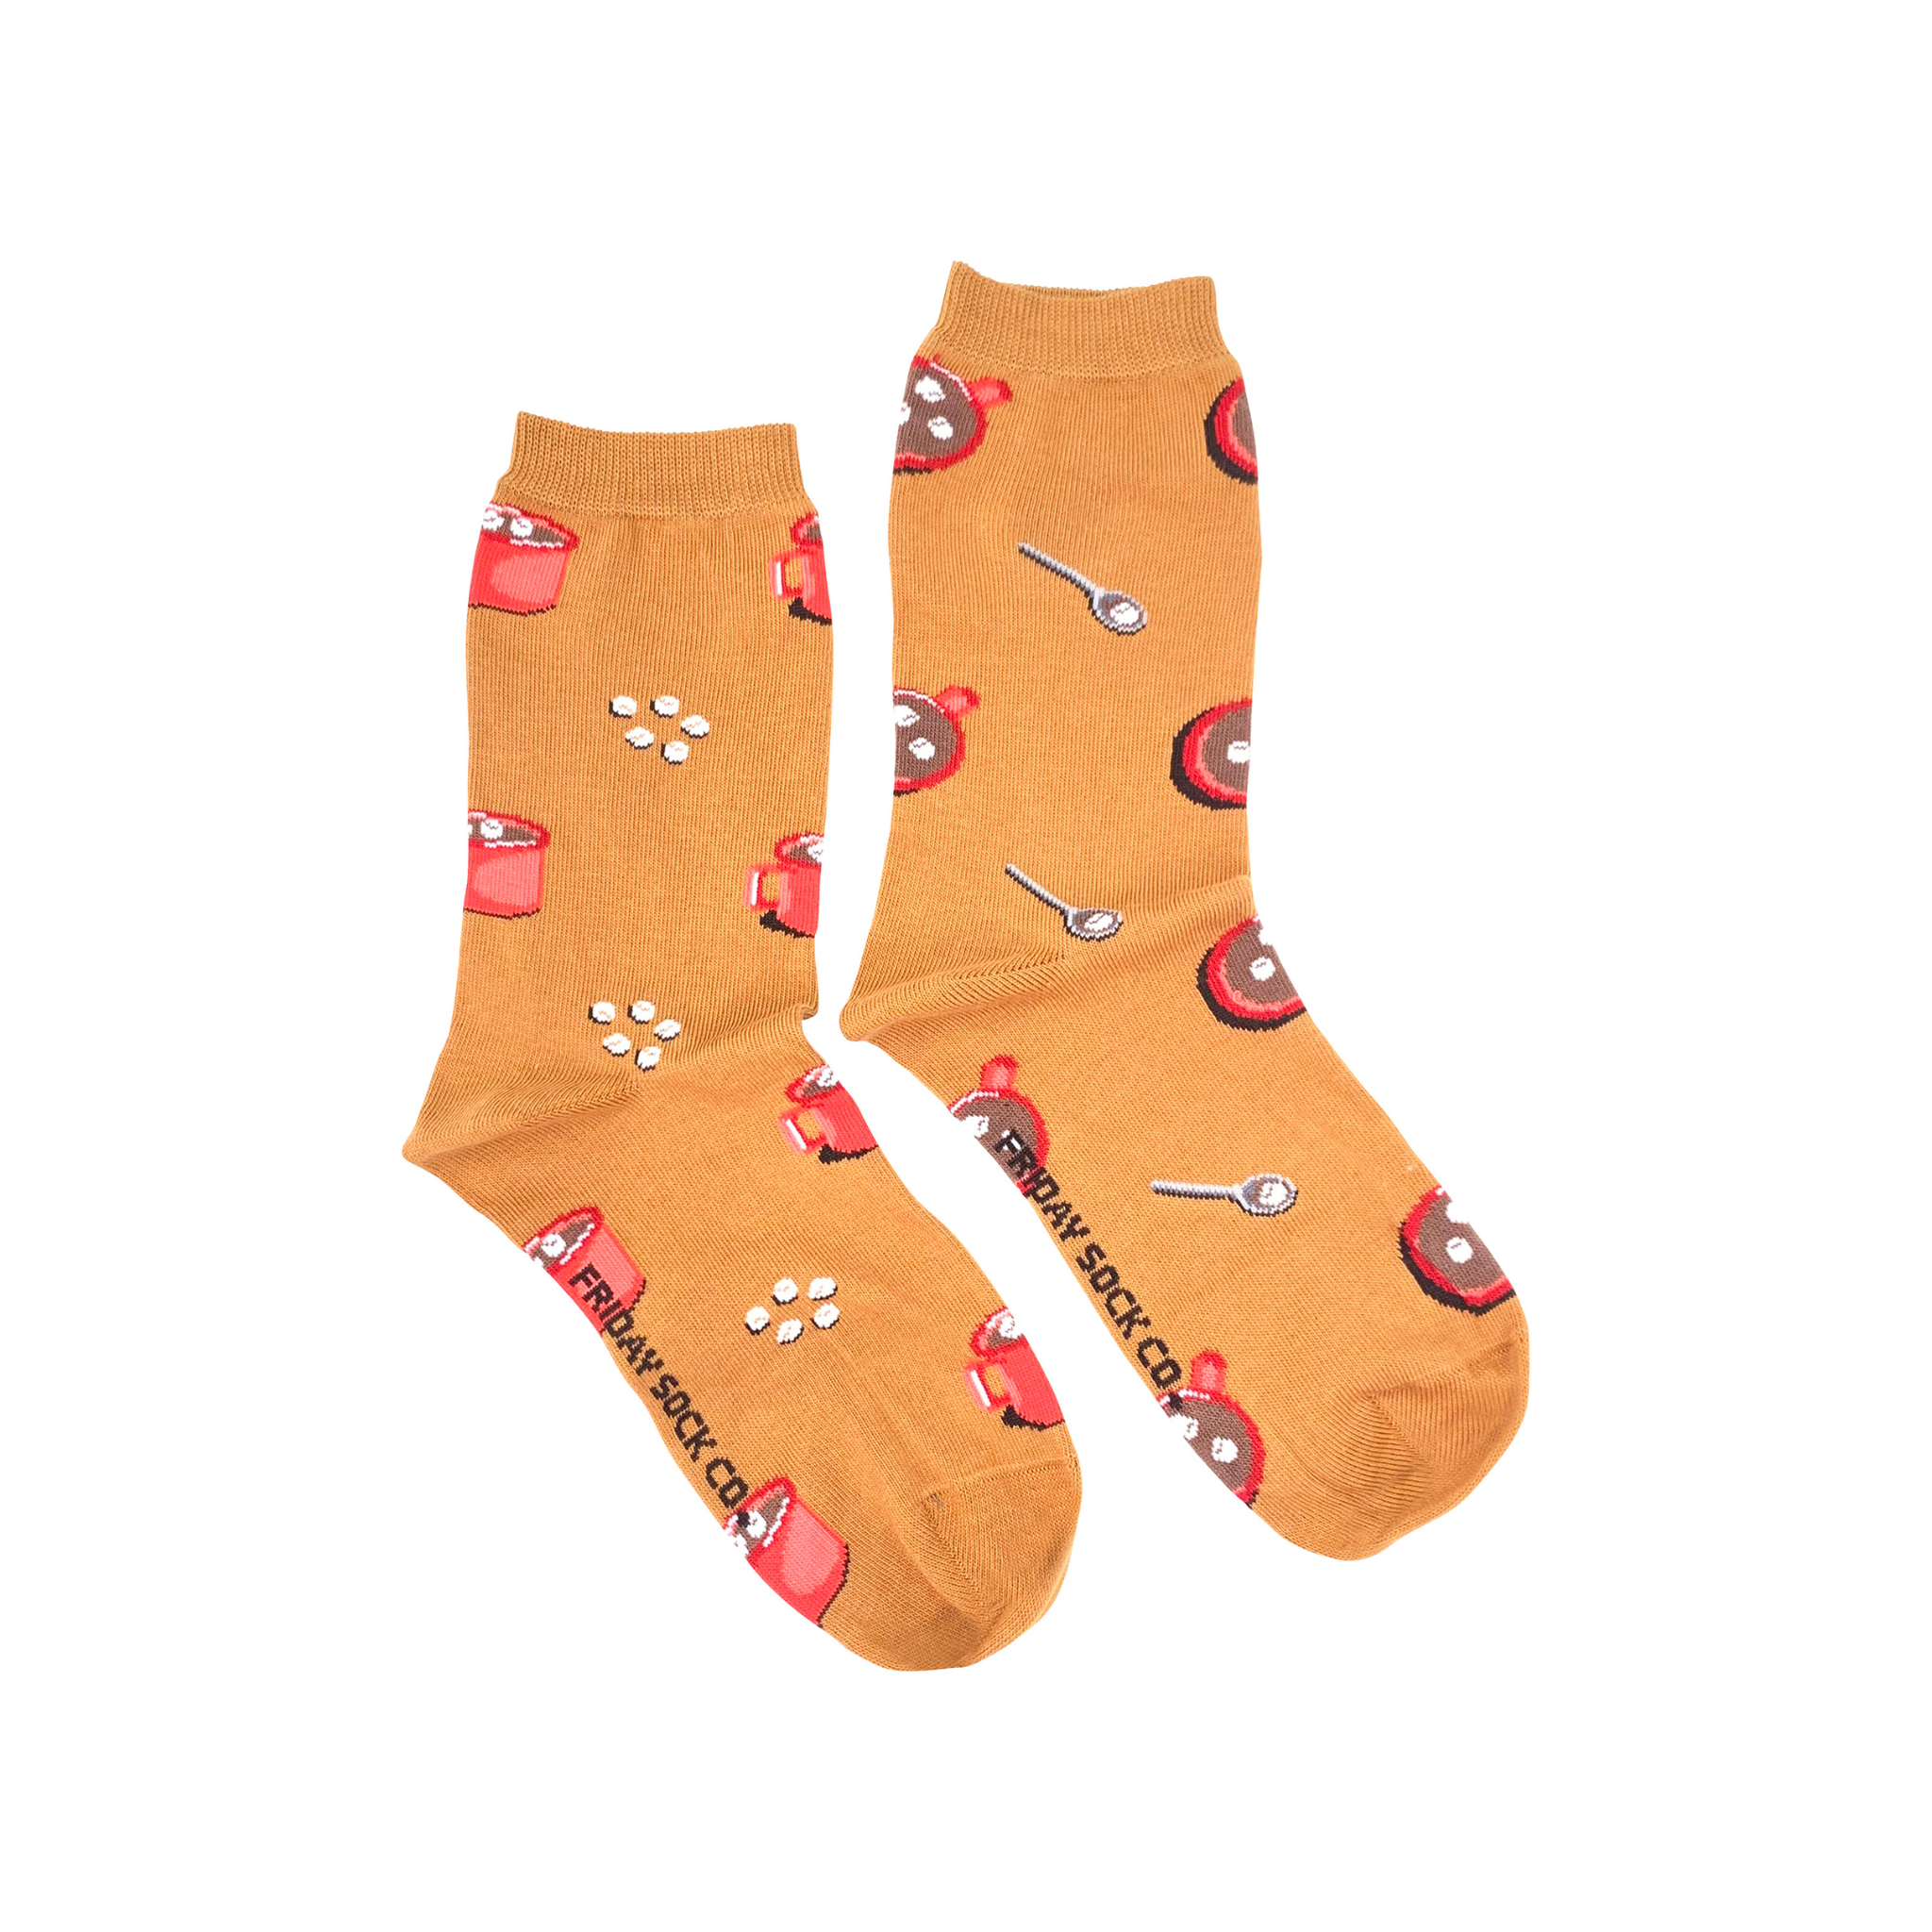 Friday Sock Co. - Women's Socks | Hot Chocolate | Warm and Cozy | Eco